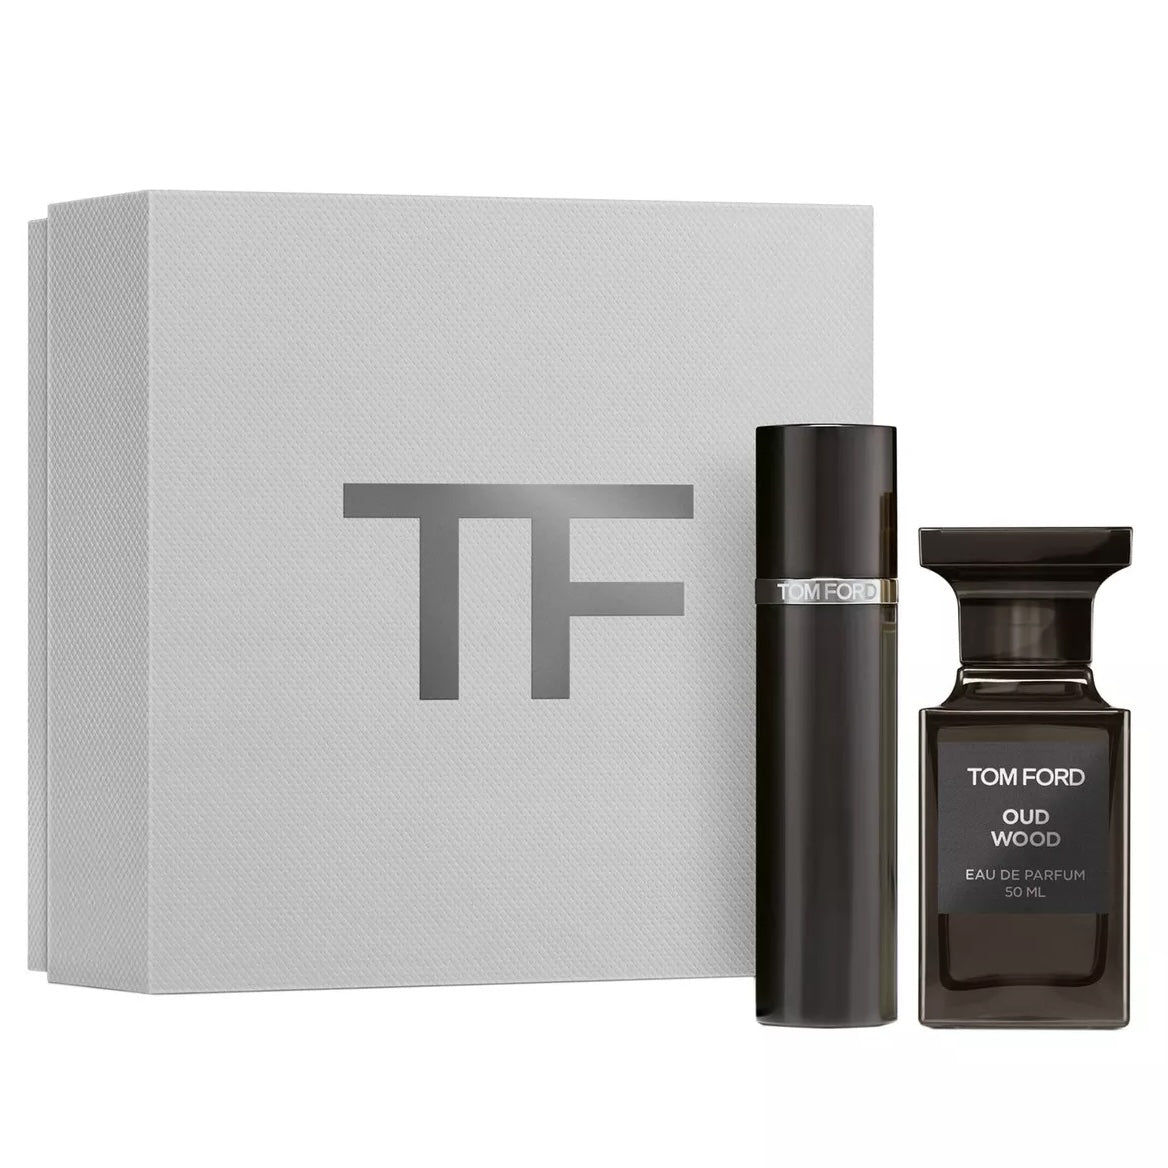 Tom Ford Oud Wood EDP Travel Set | My Perfume Shop Australia